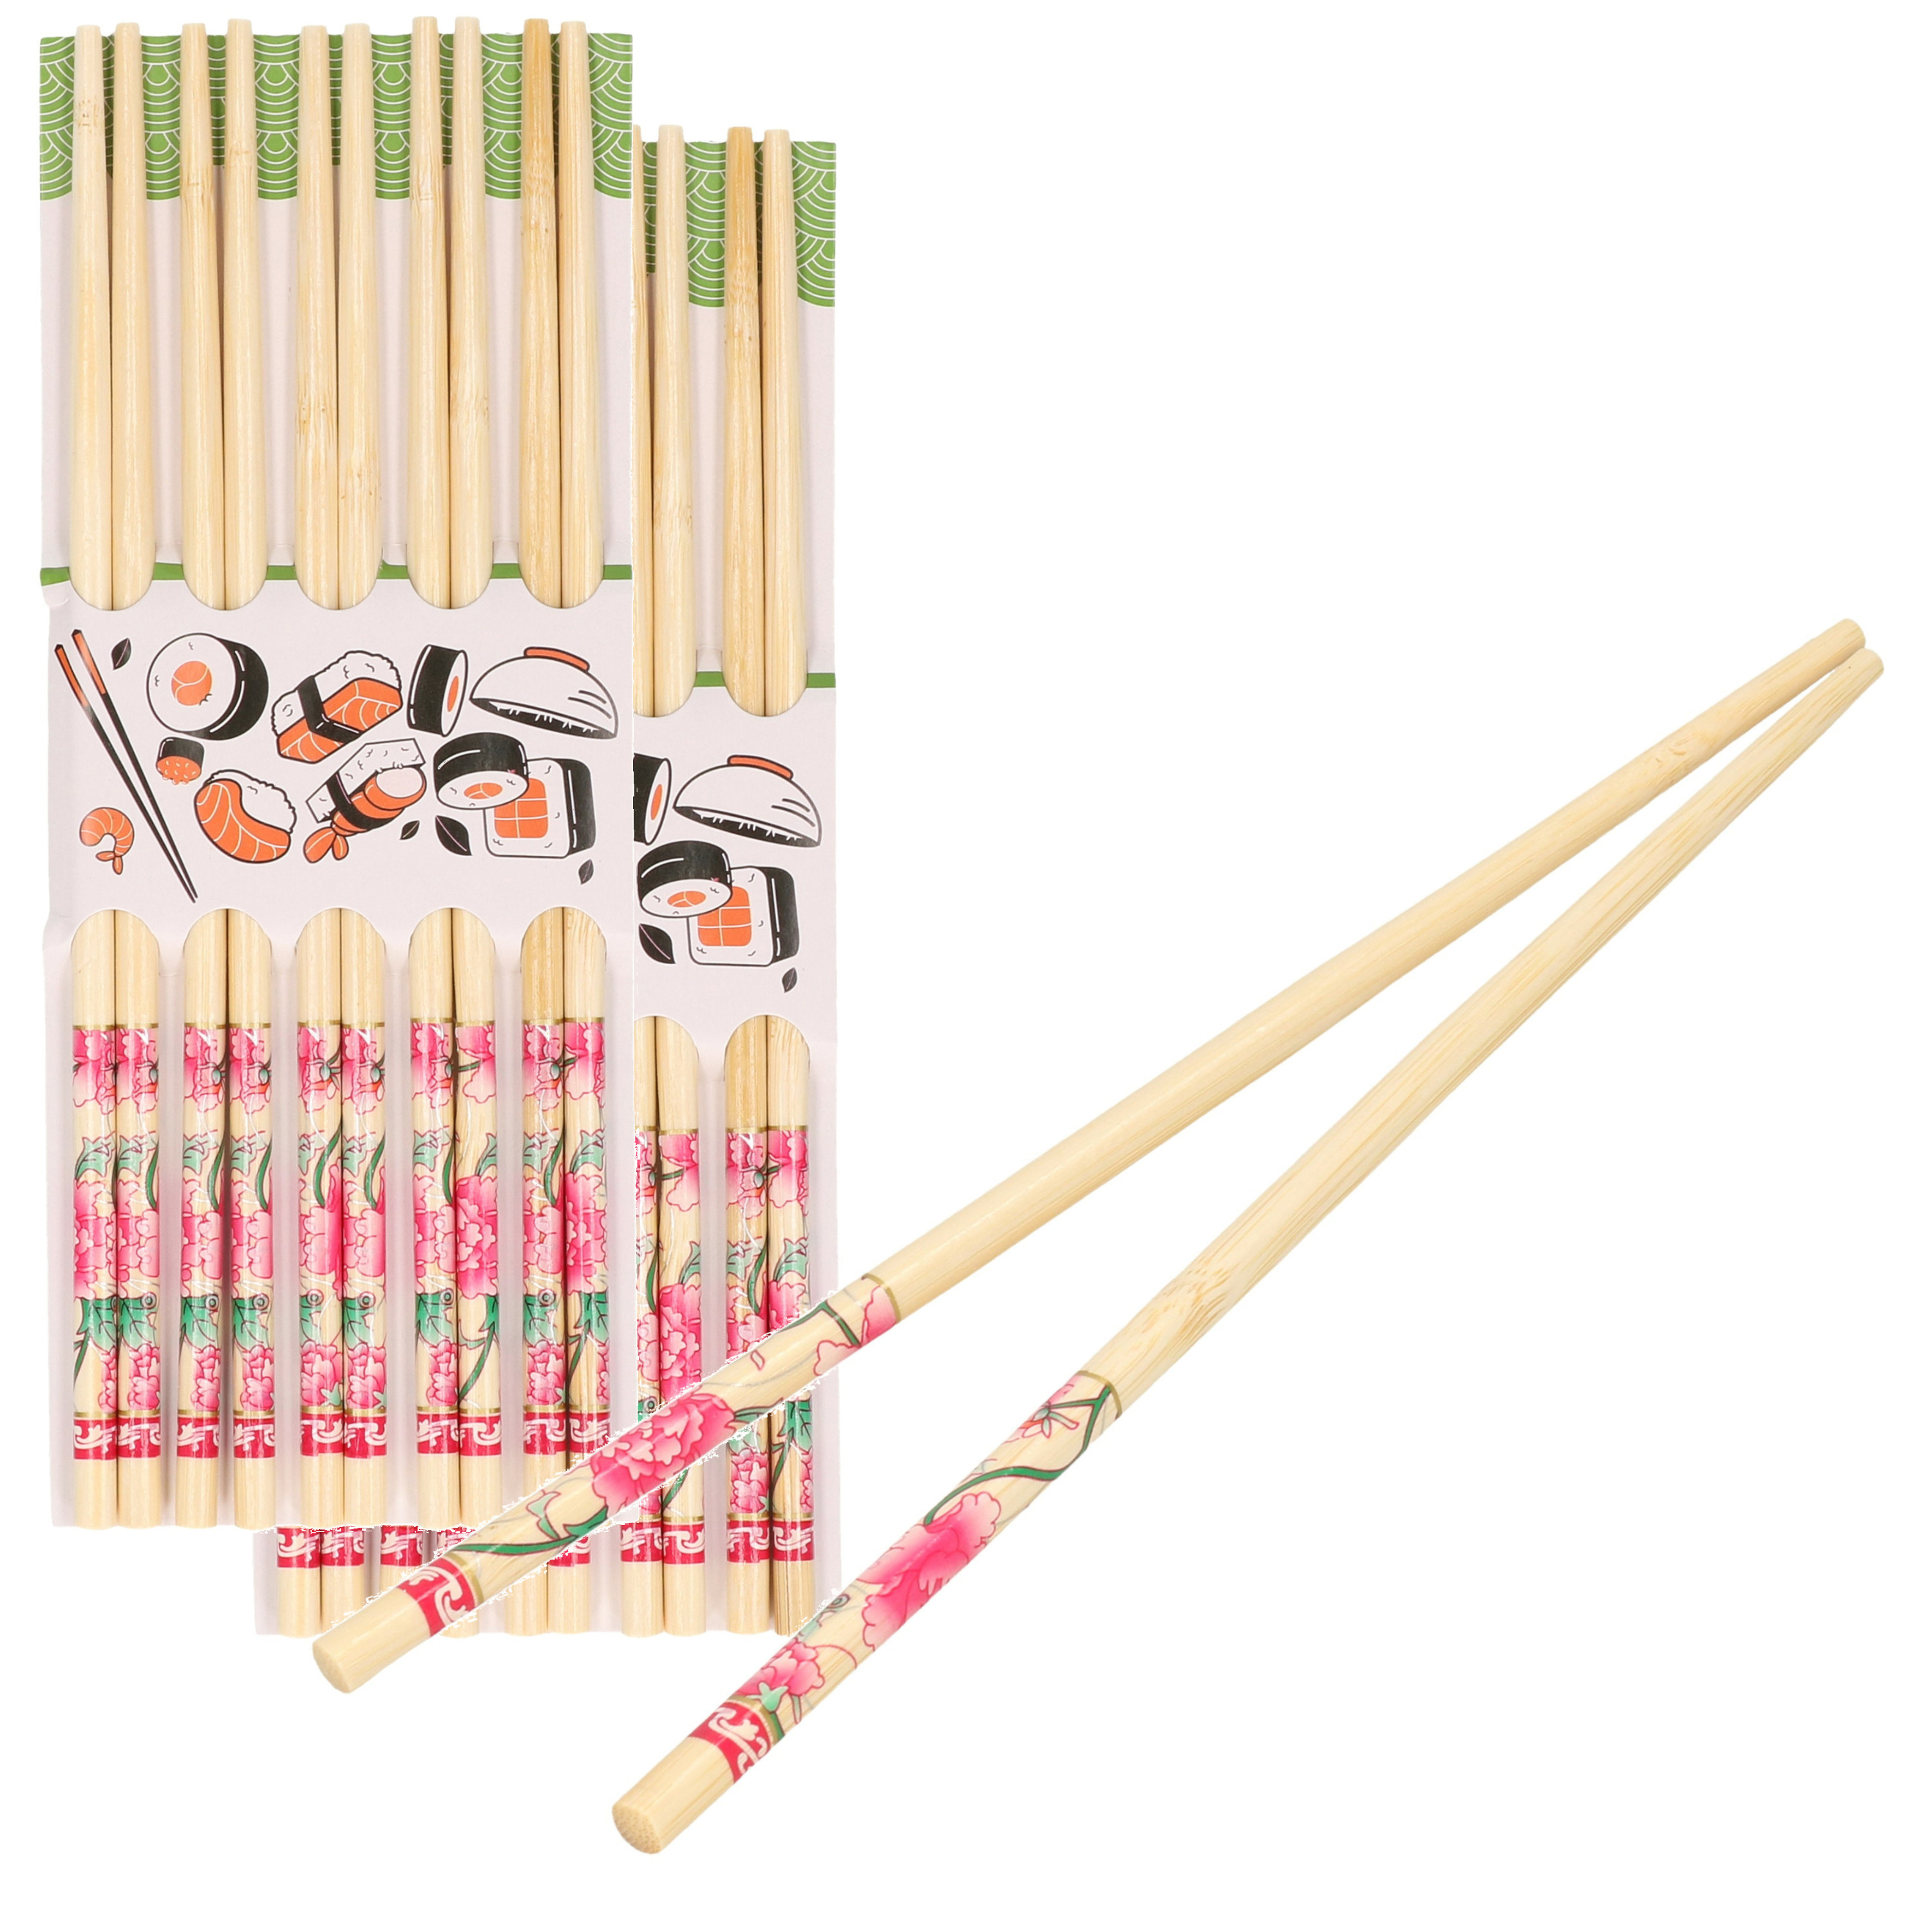 Sushi eetstokjes 30x setjes bamboe hout roze bloemen print 24 cm